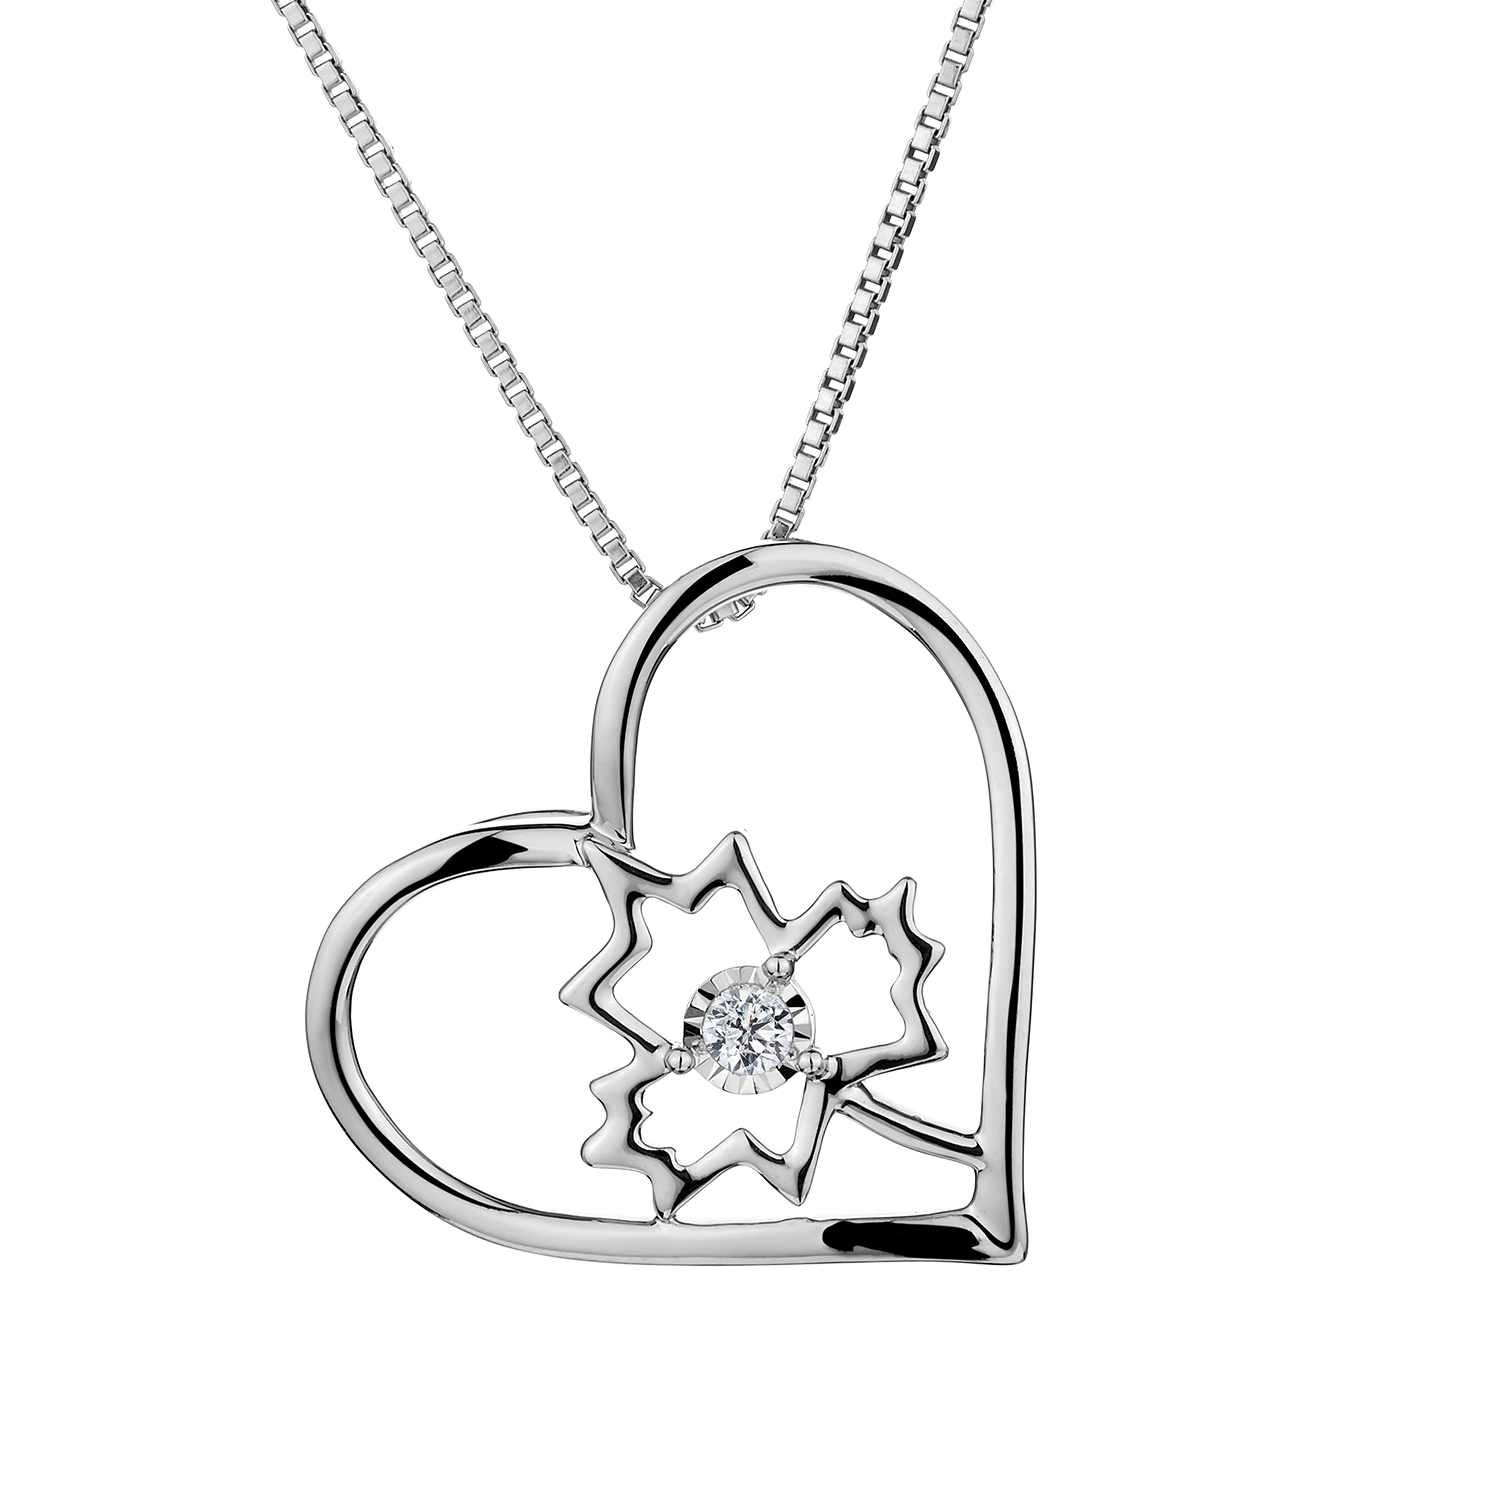 .03 Carat of Diamond Heart Maple Leaf Pendant, Silver......................NOW